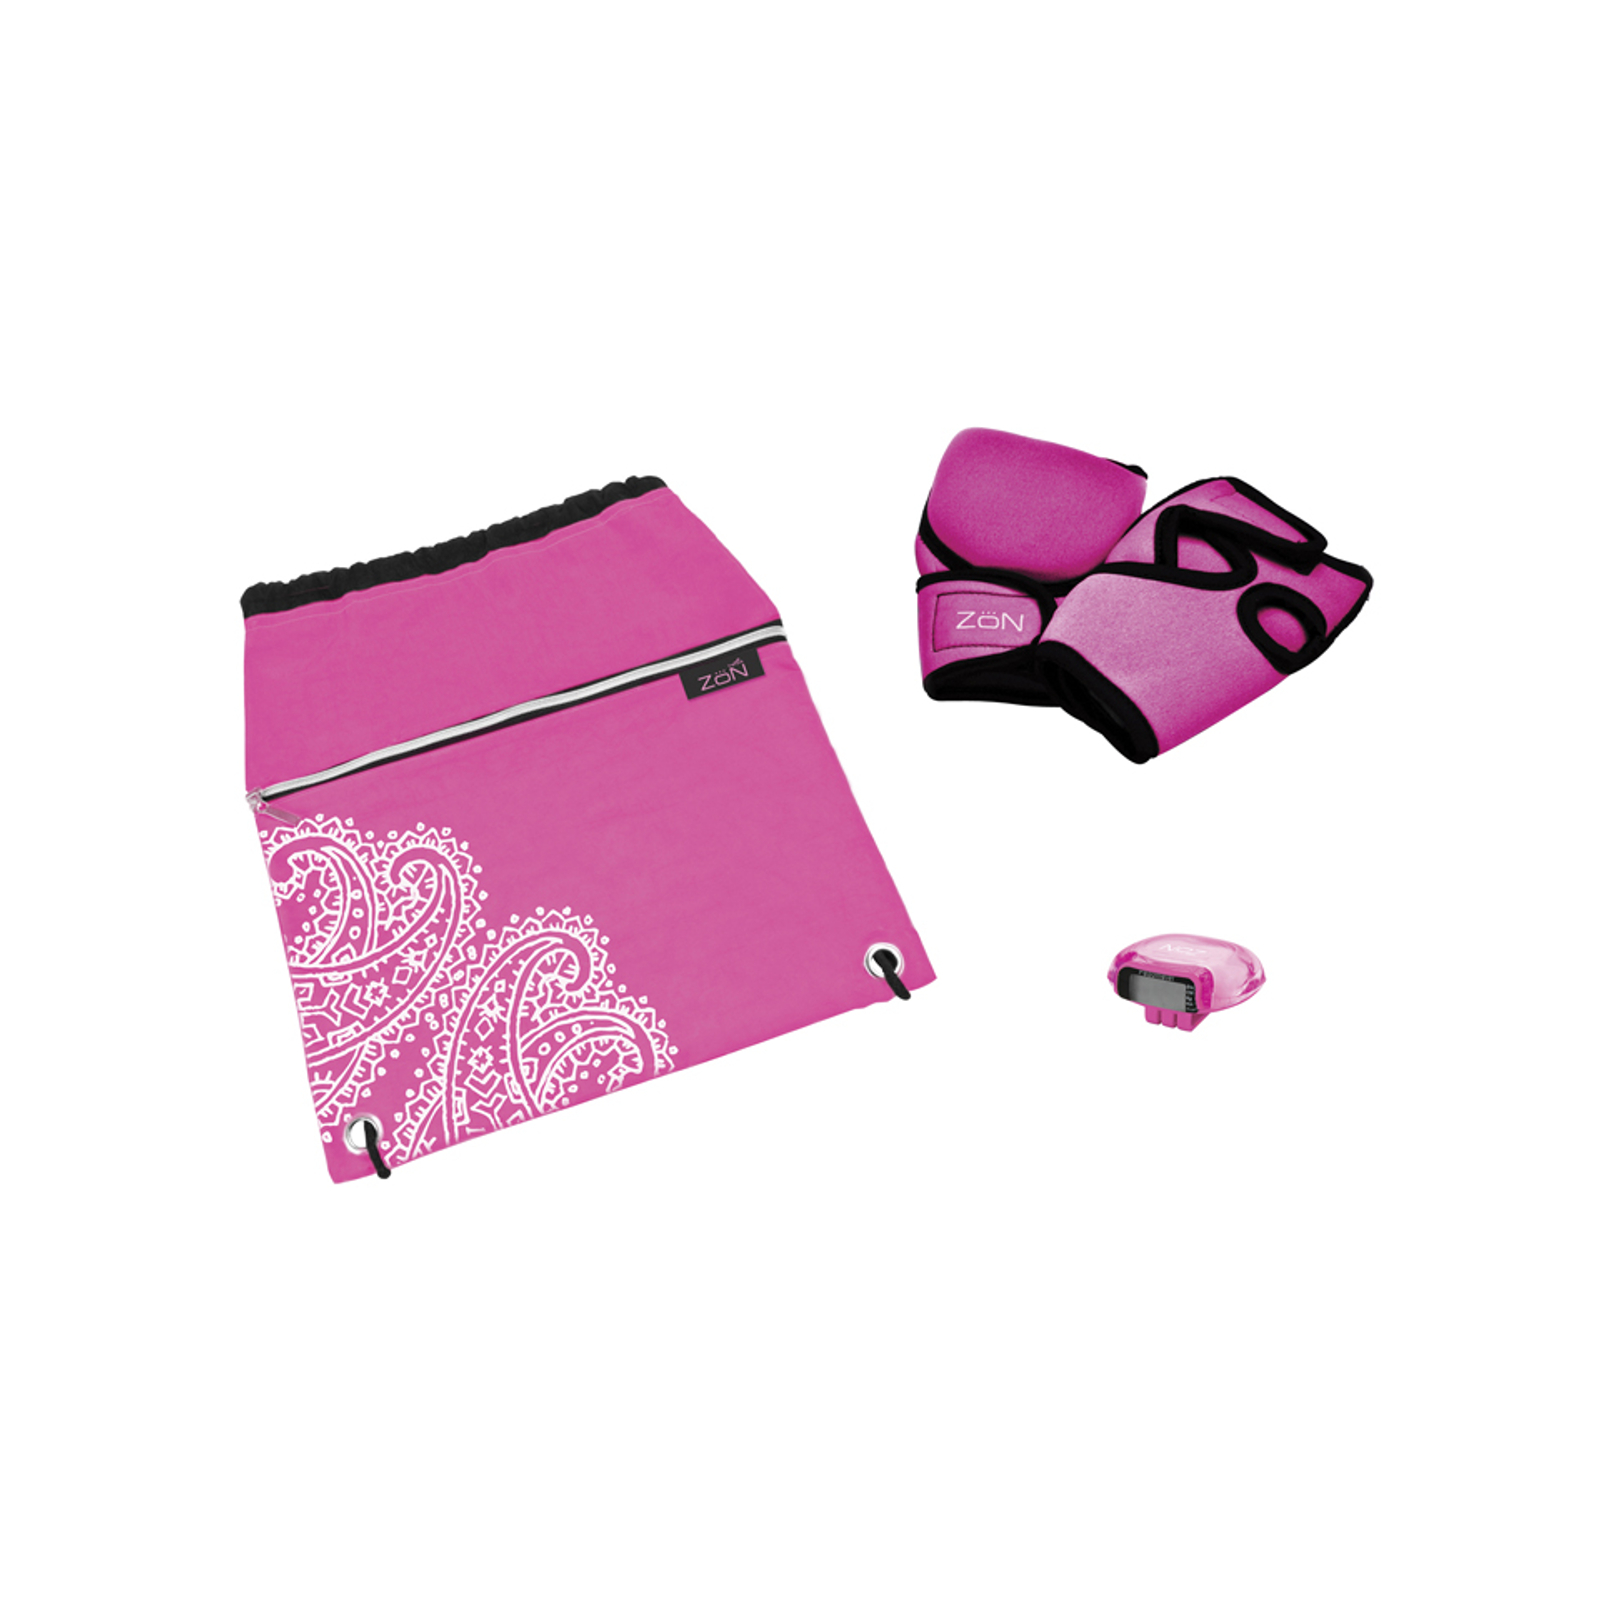 ZoN Pink Deluxe Walking Kit